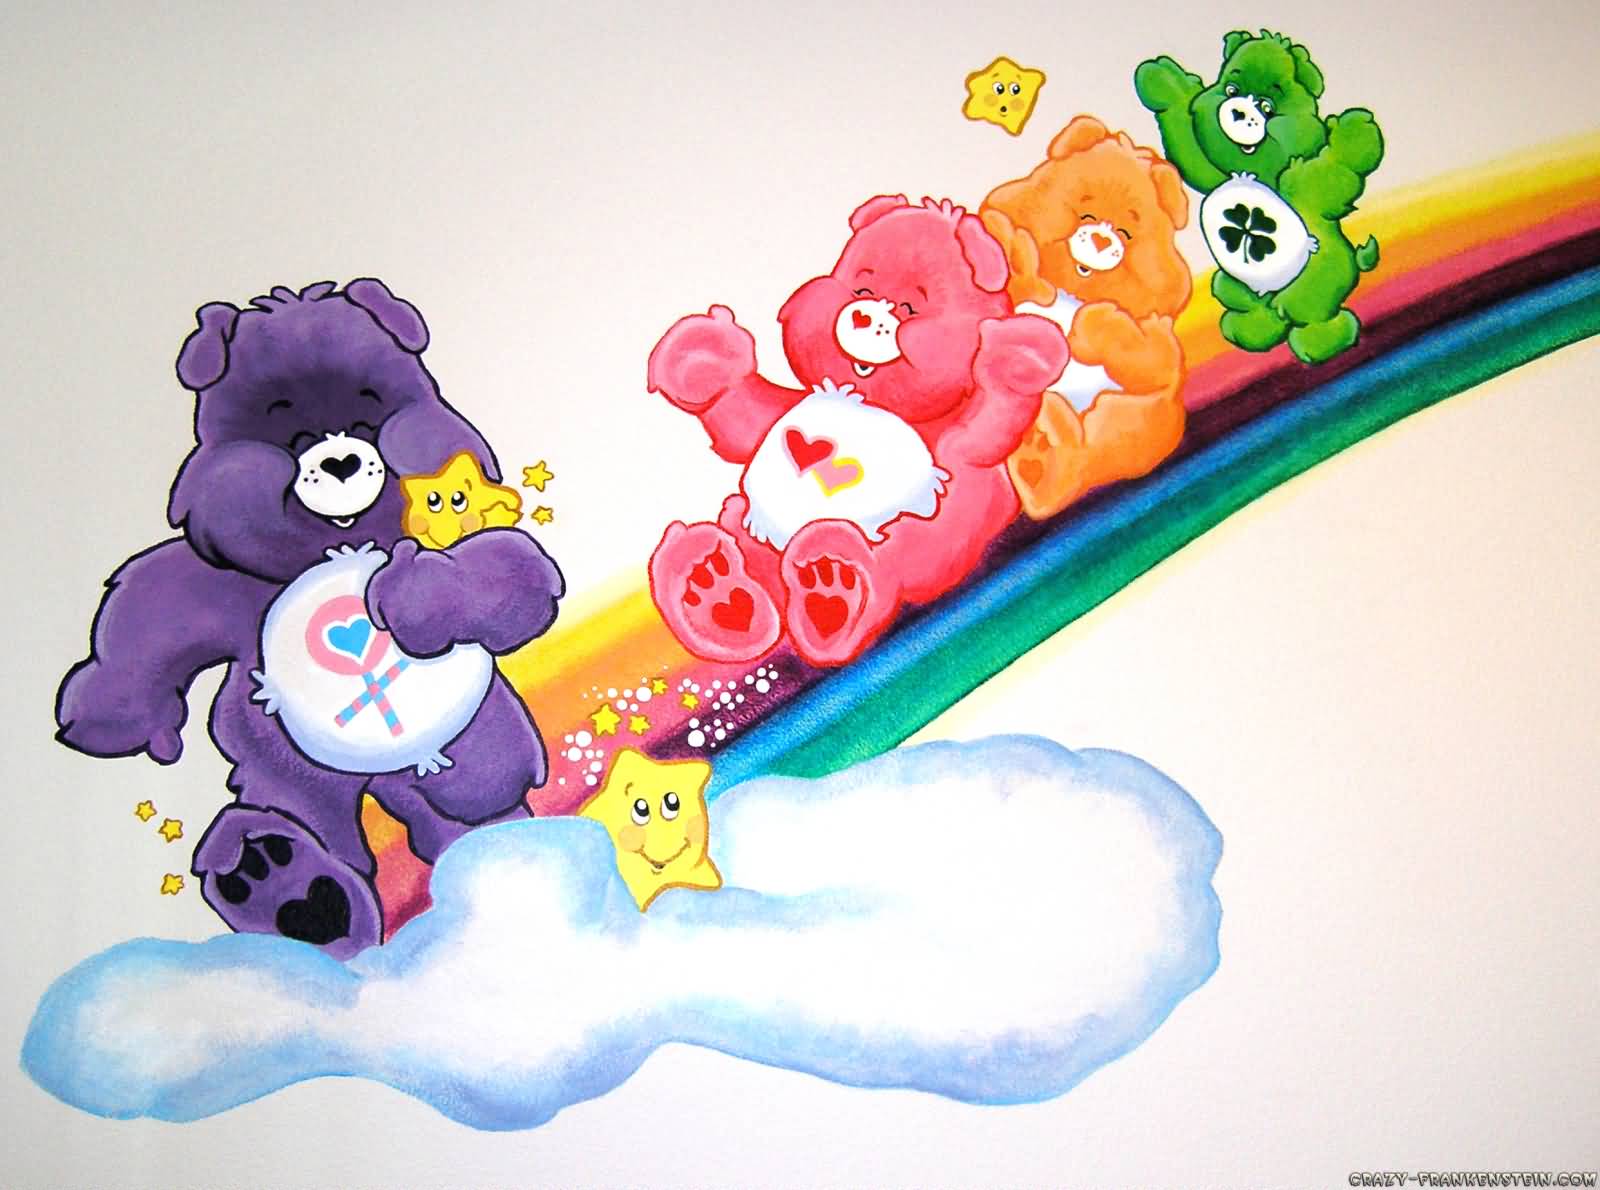 care bears wallpaper,cartoon,animated cartoon,animation,illustration